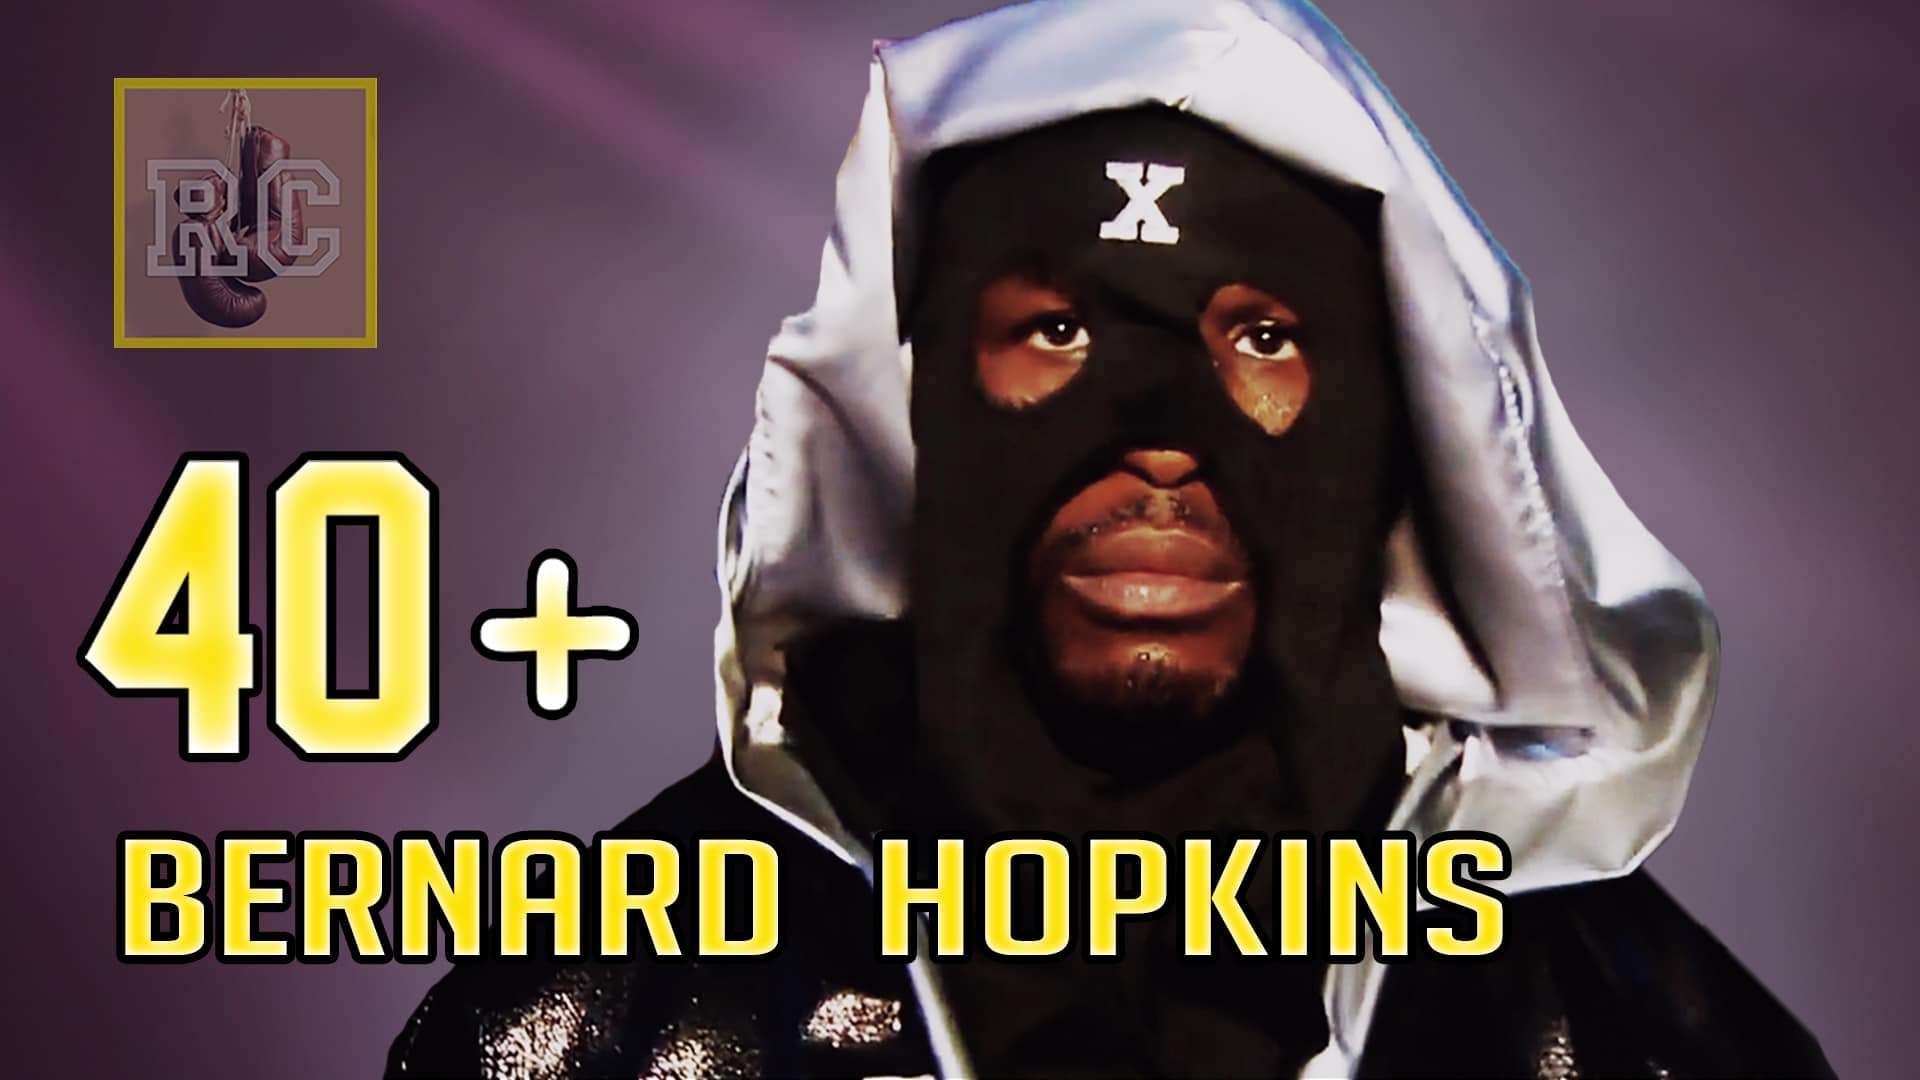 Bernard Hopkins boxing image / photo